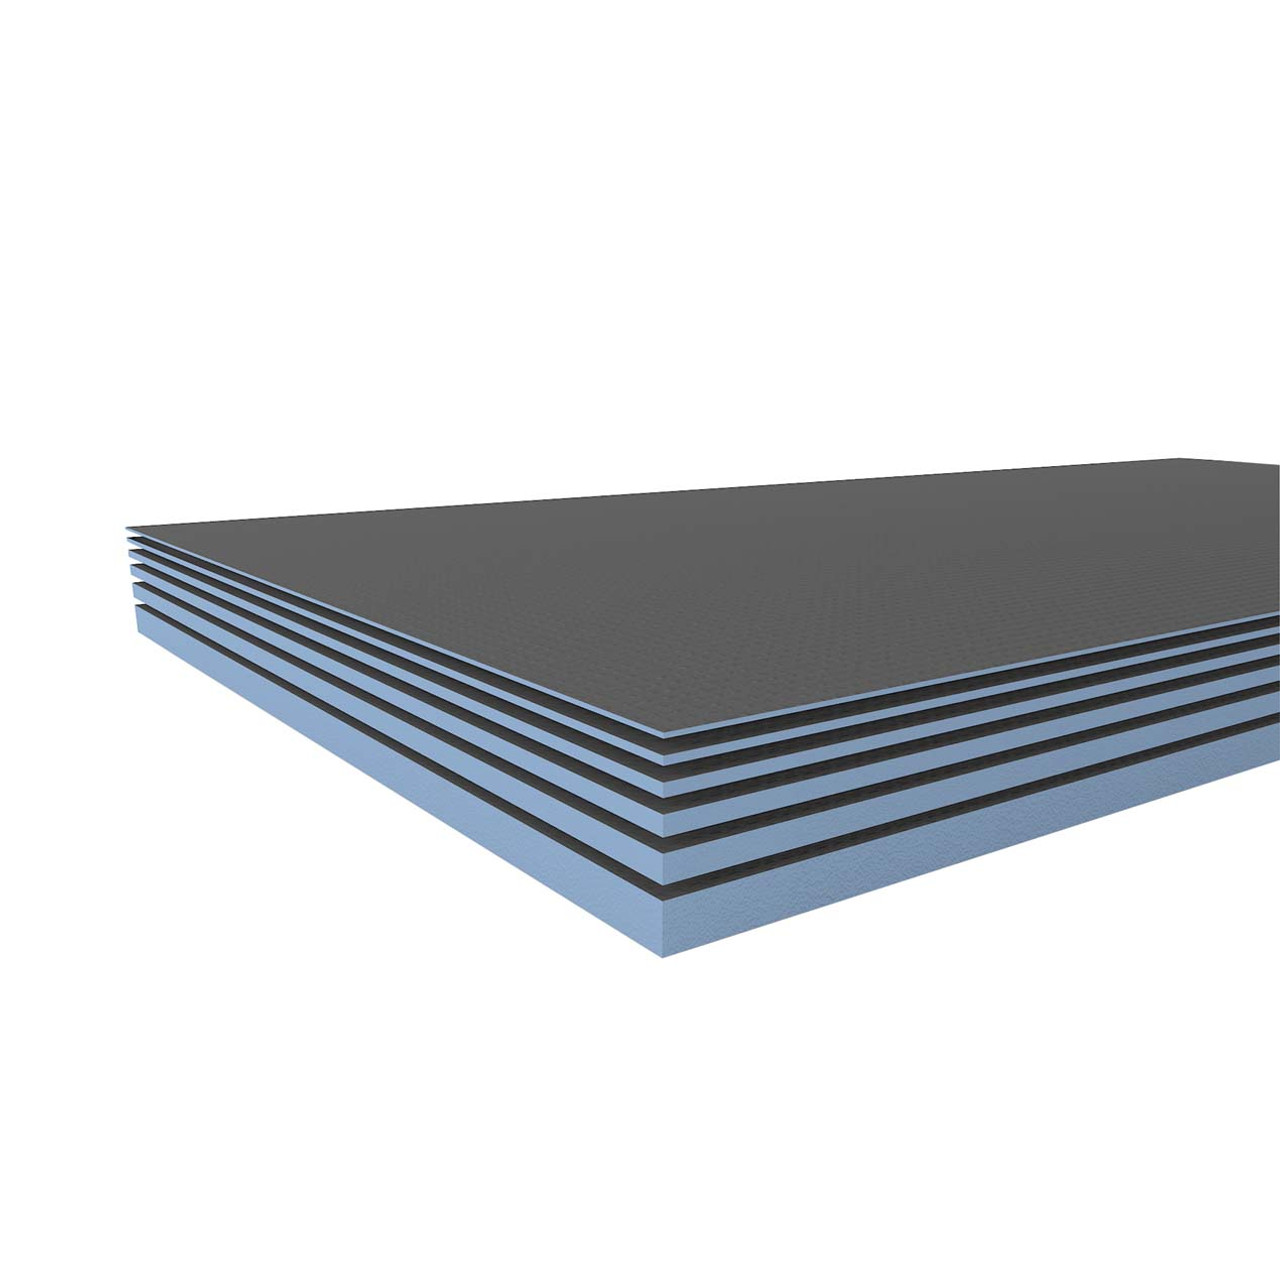 Aquafix Tile Backer Board 1200x600x6mm